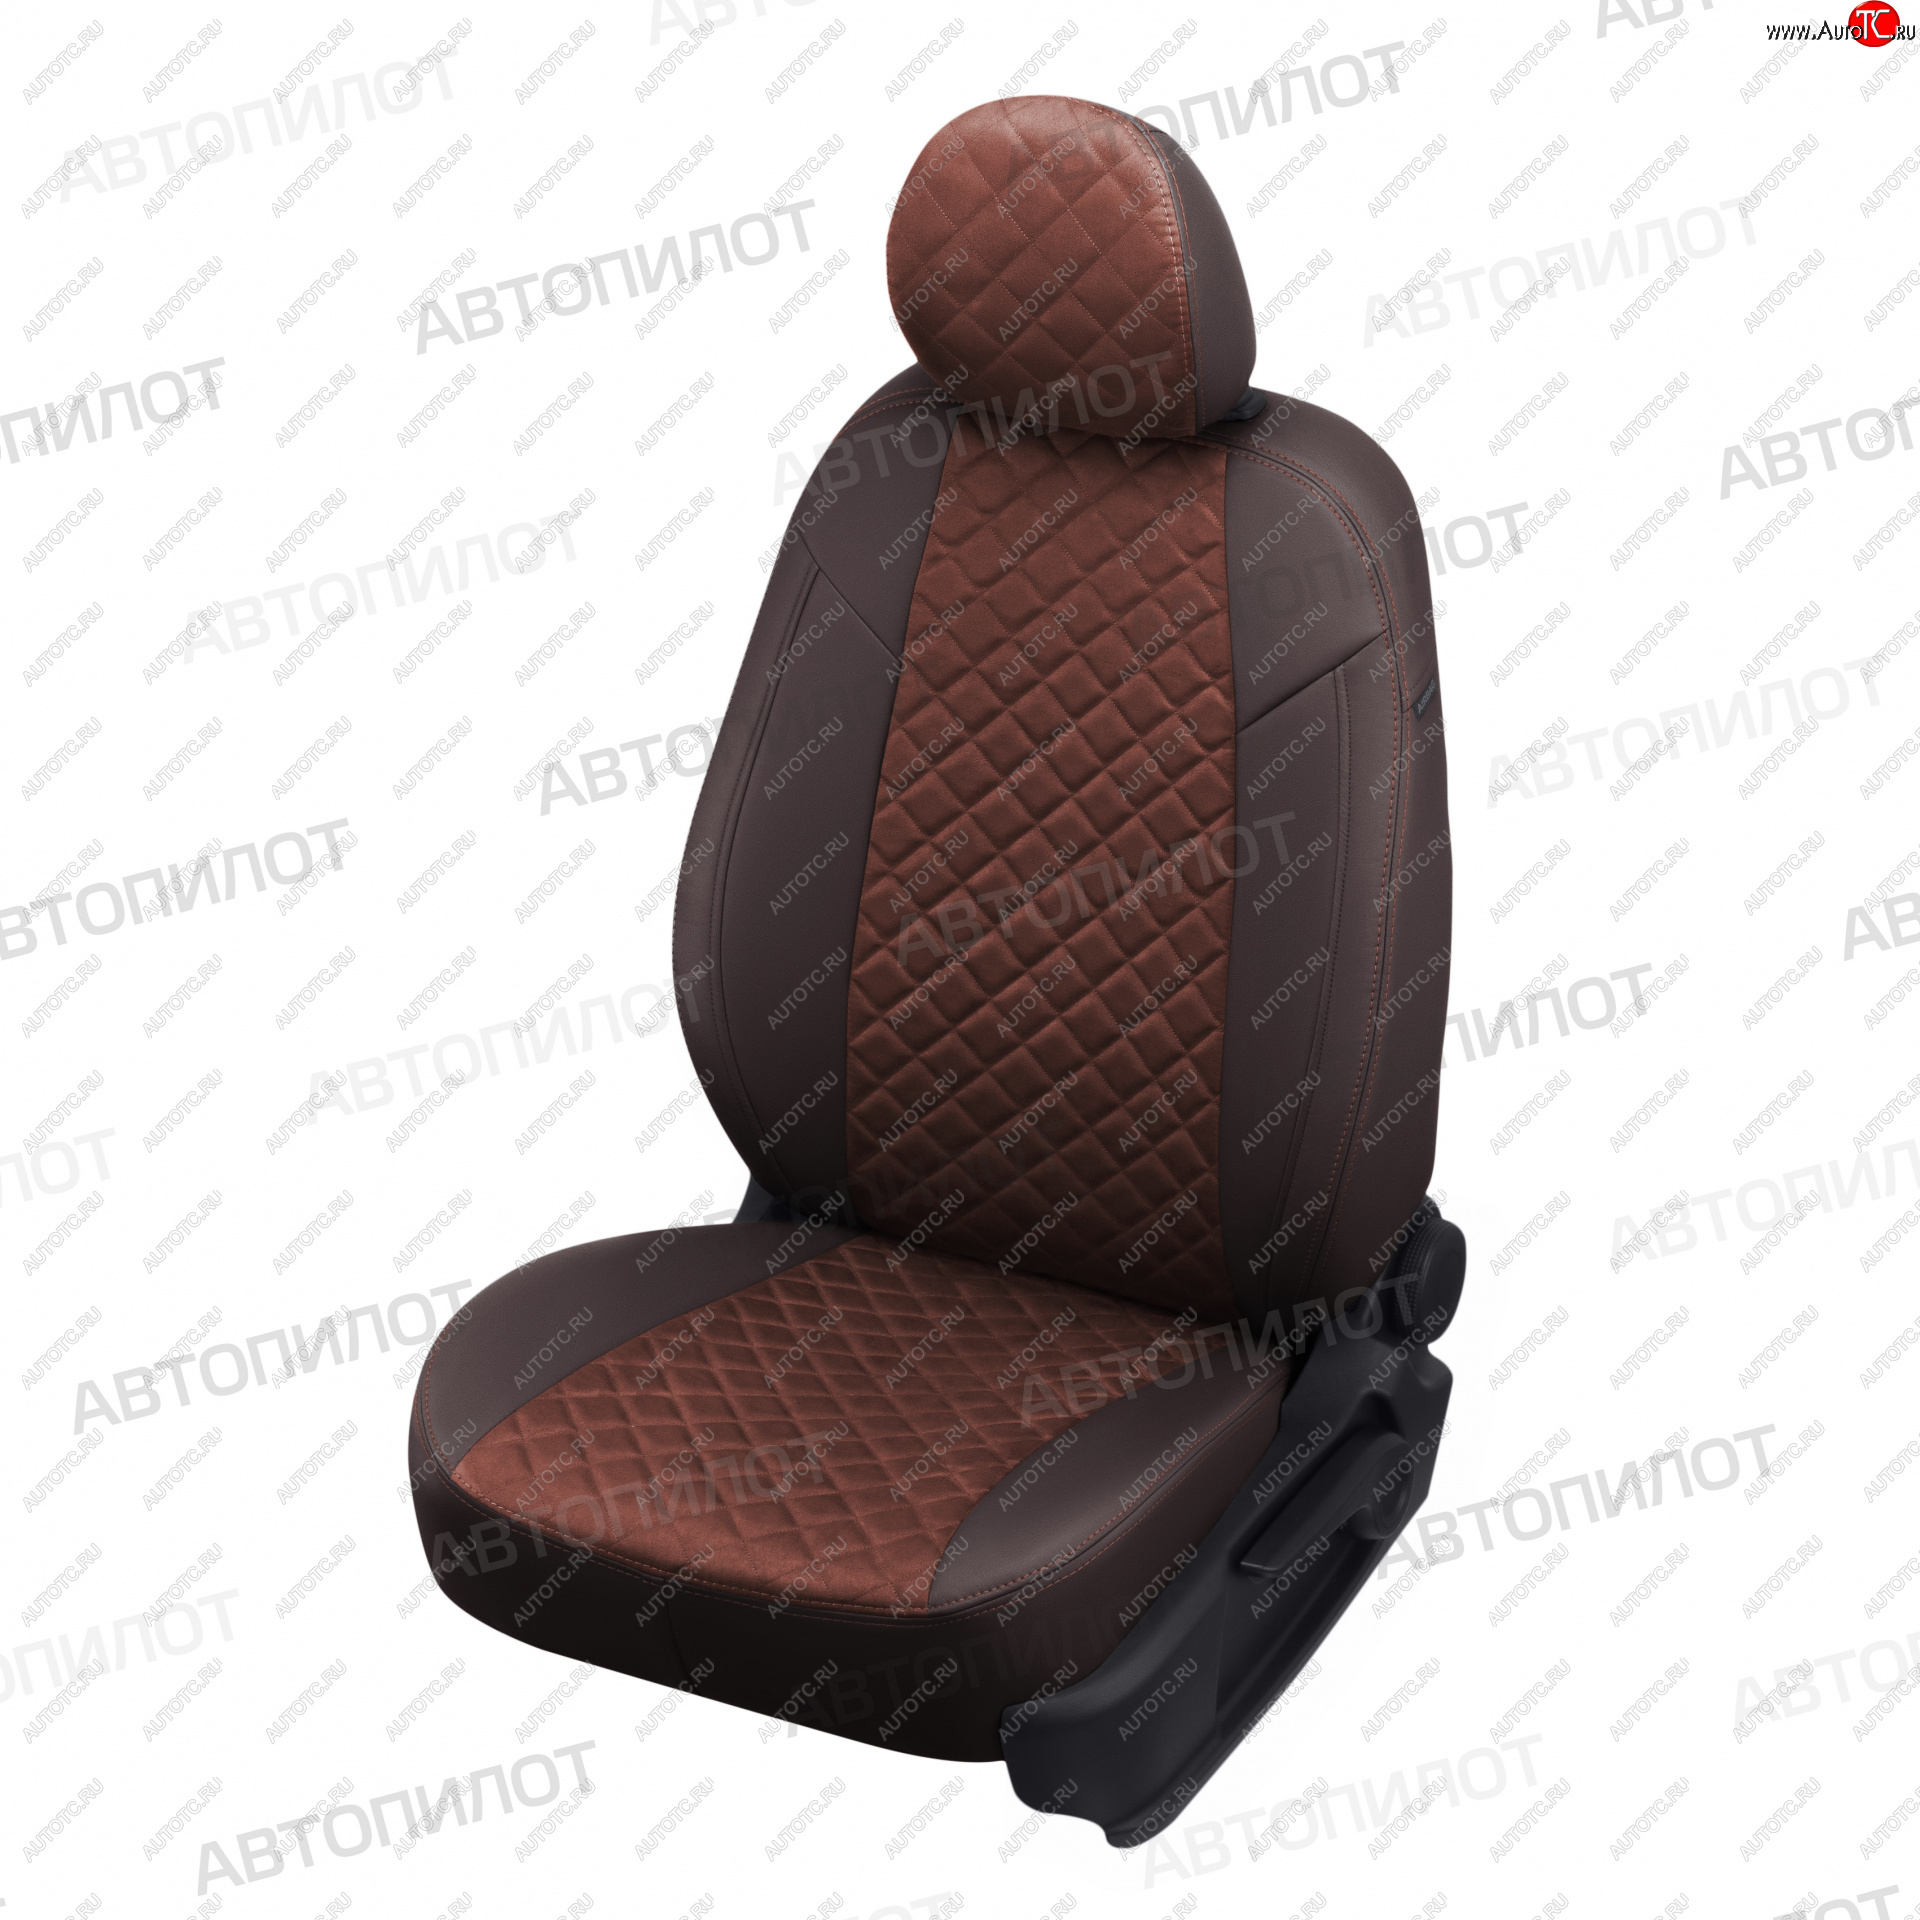 13 999 р. Чехлы сидений (экокожа/алькантара) Автопилот Ромб  BMW 1 серия  F21 (2011-2020) (шоколад)